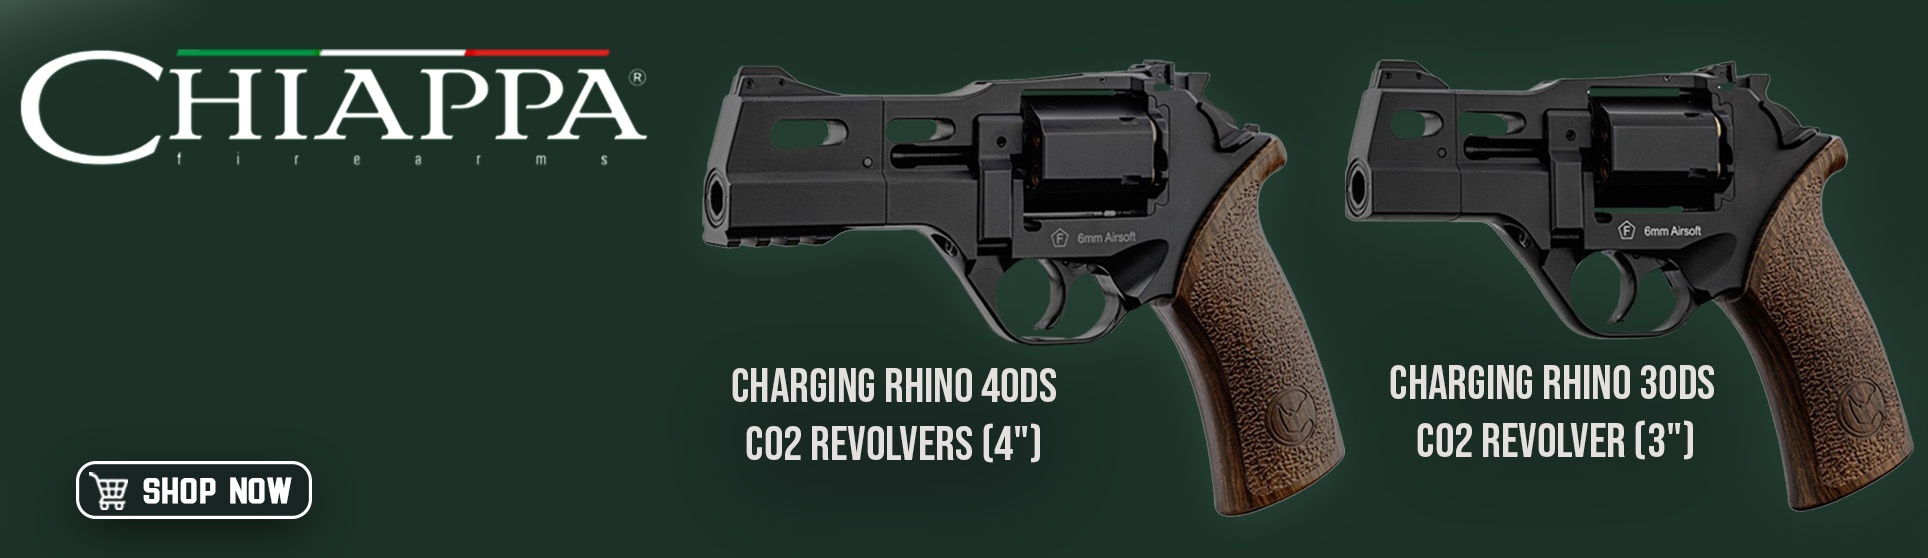 Chiappa Revolvers 